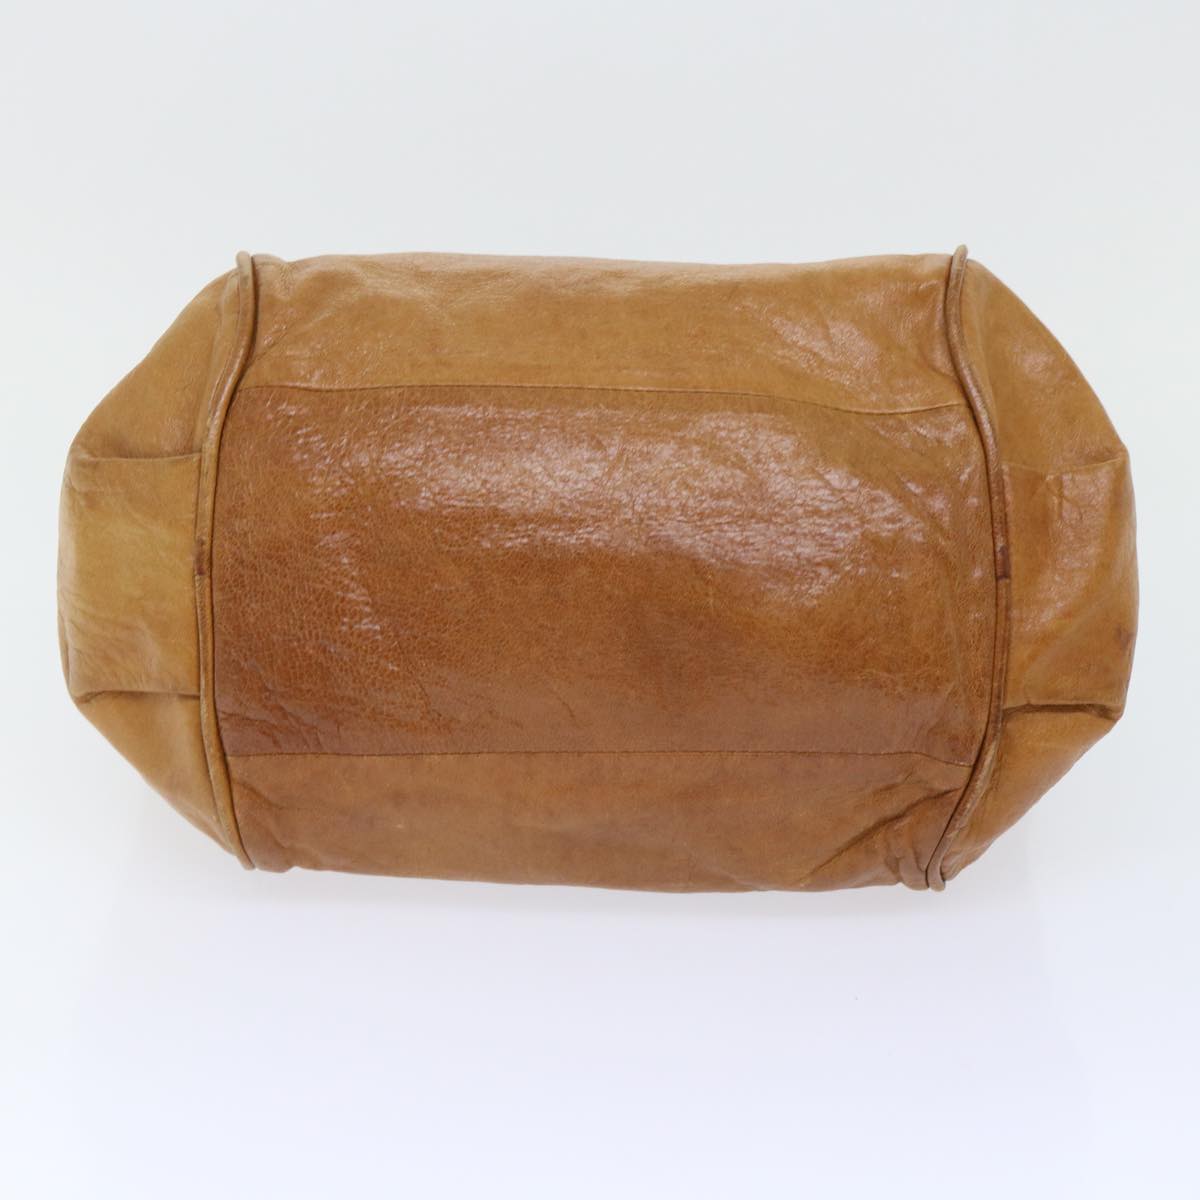 Chloe Etel Hand Bag Leather 2way Brown 01-11-50 Auth yb263